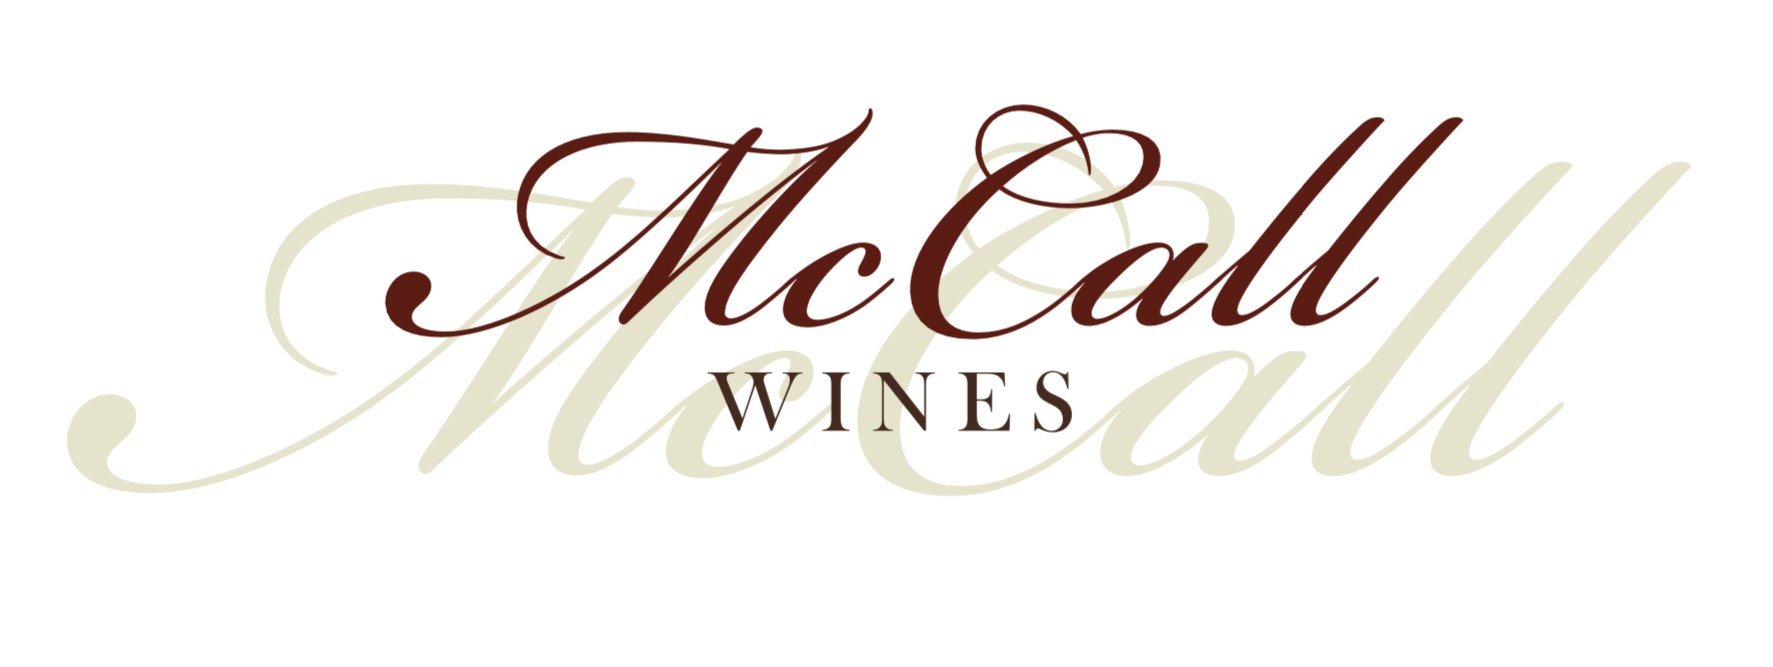 McCall Wines logo screenshot large.jpg